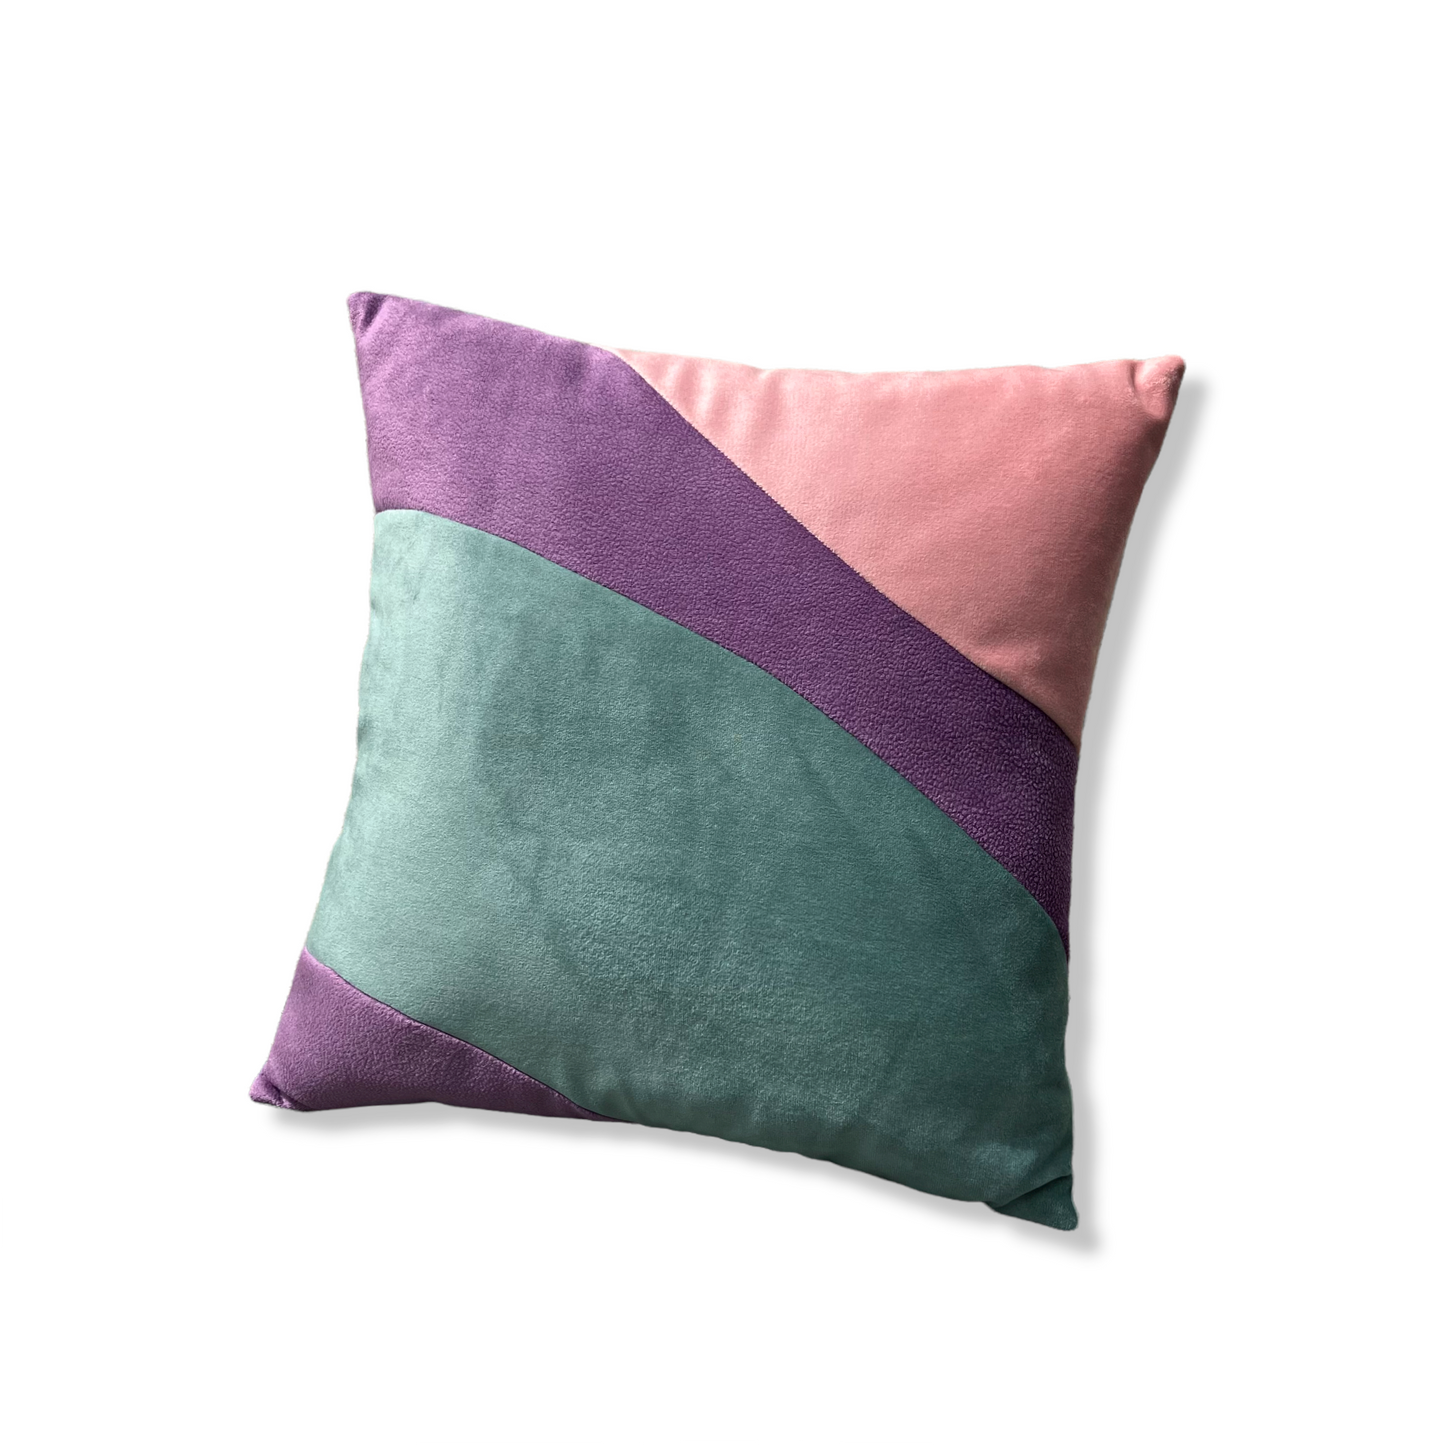 Upcycled velvet cushion - pink, lilac & celadon